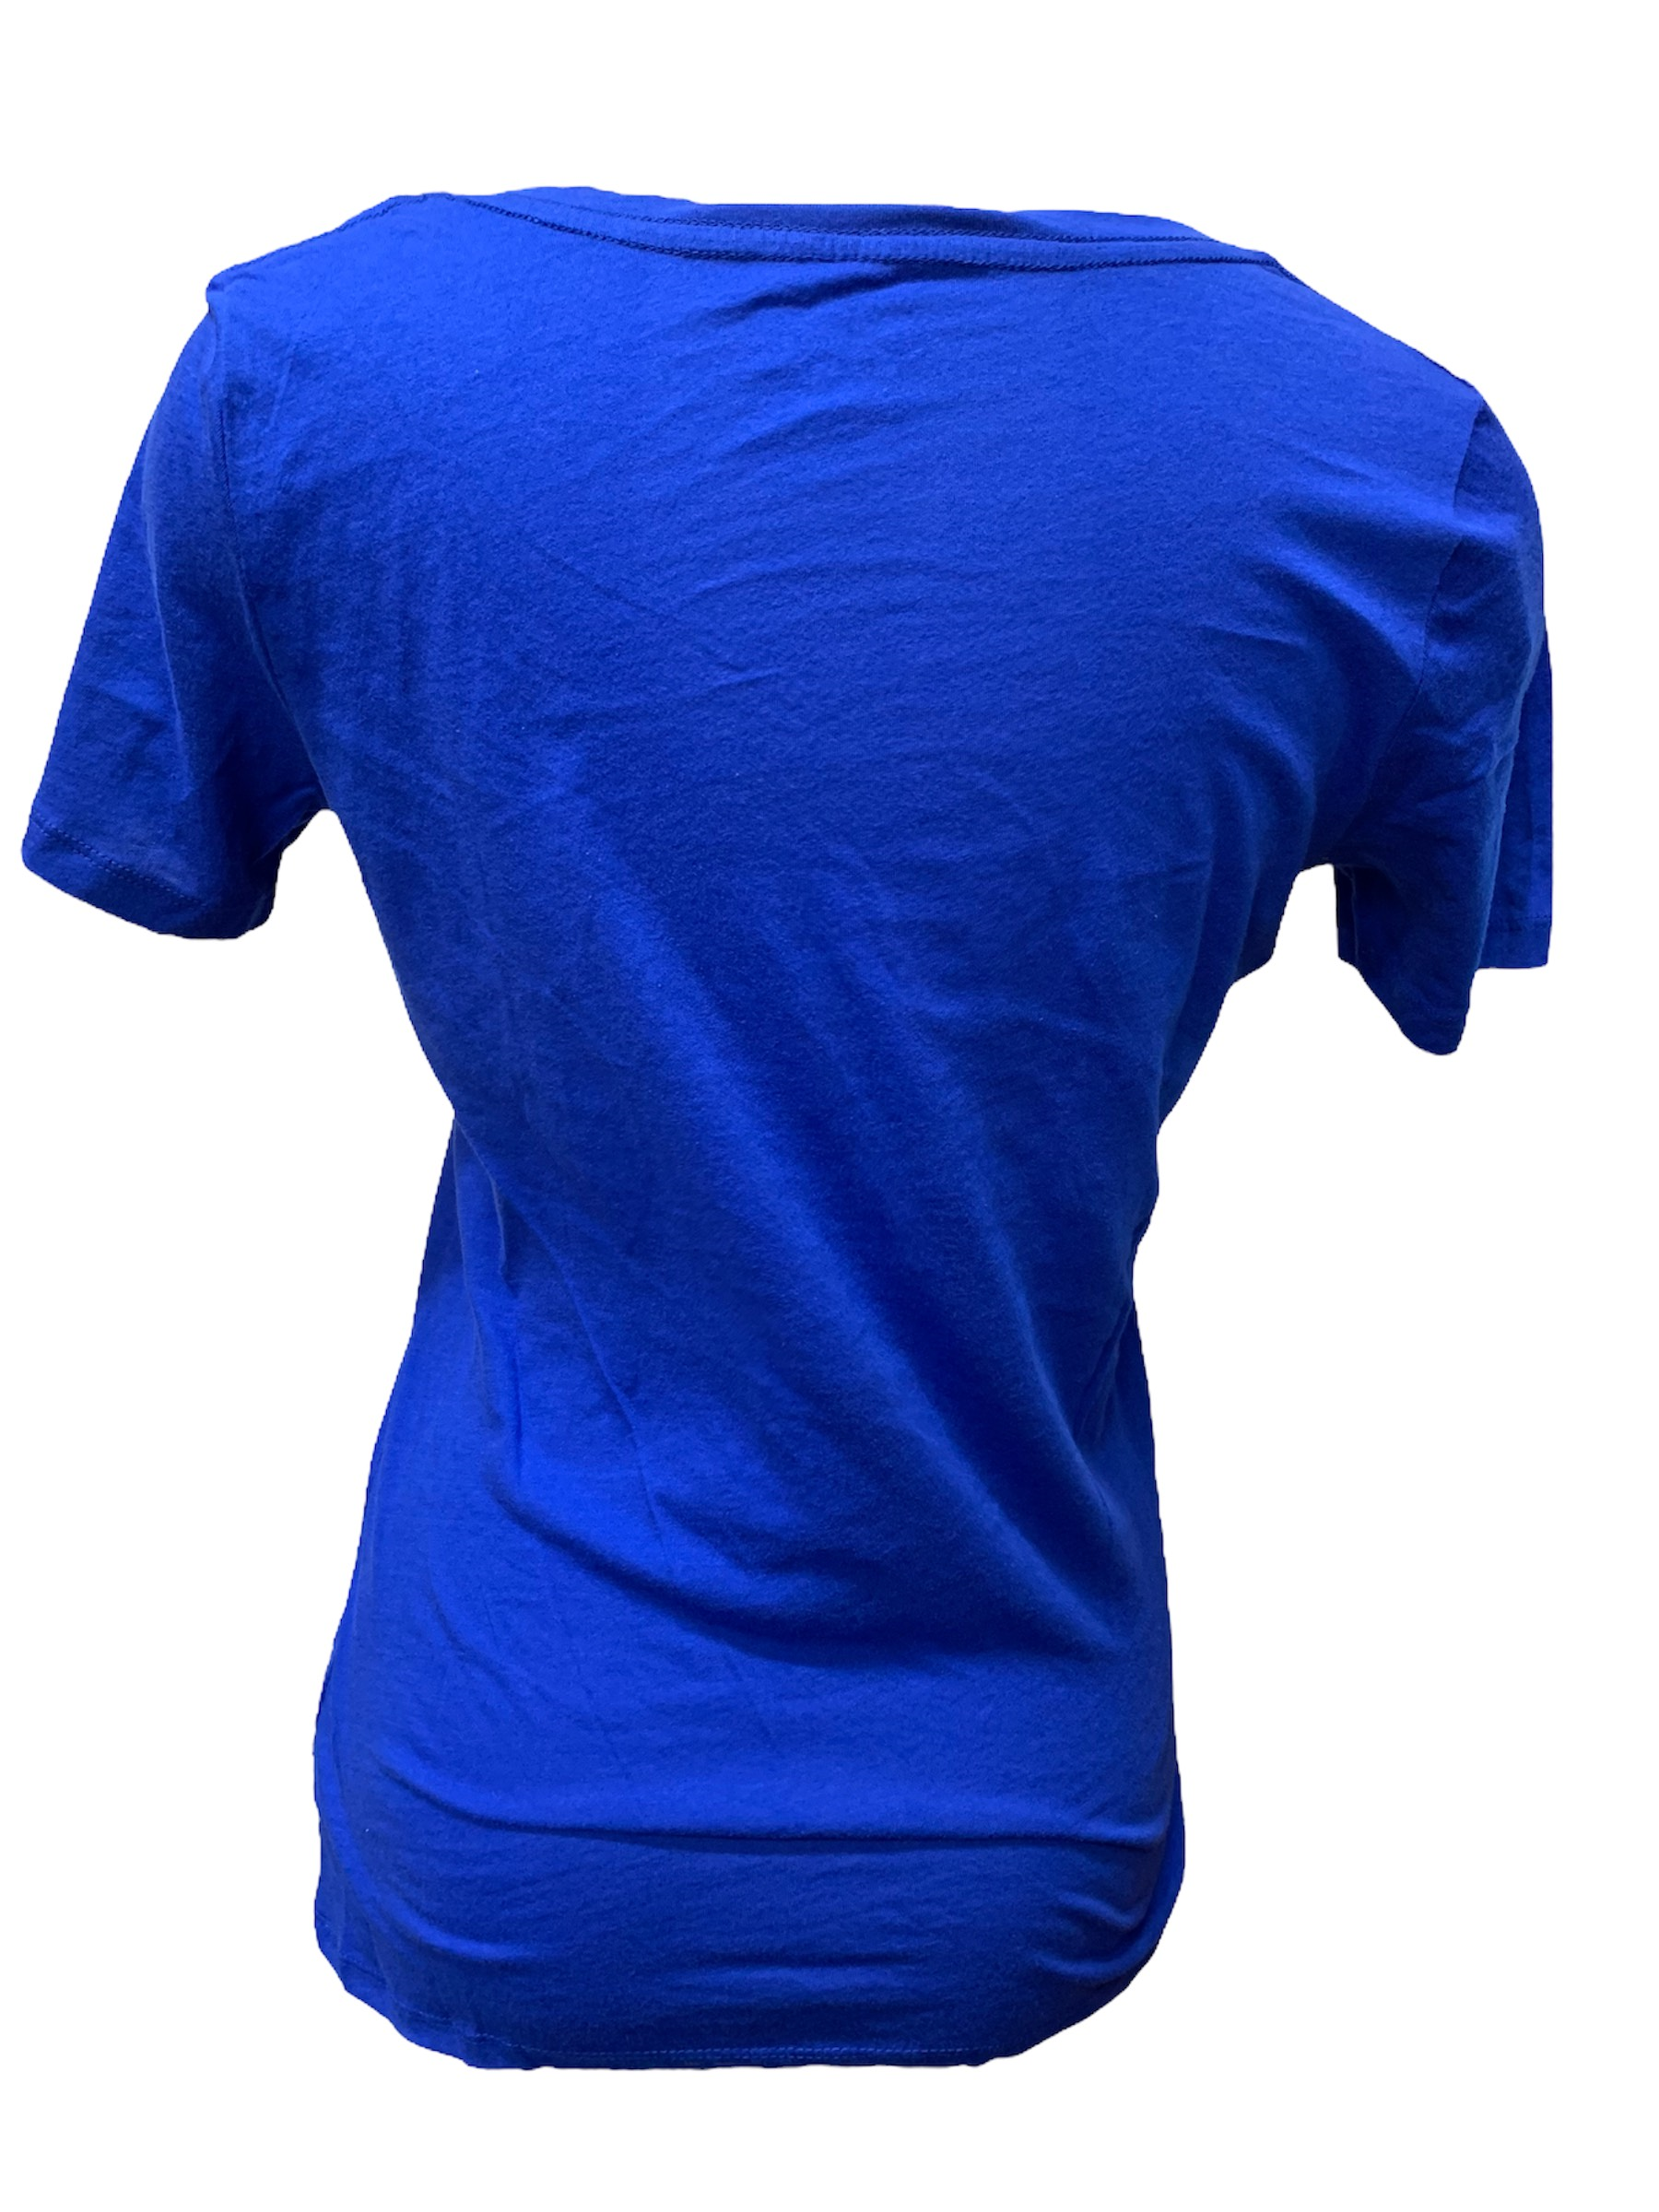 Los Angeles Dodgers Short Sleeve Graphic T Shirt Black Womens Sz S